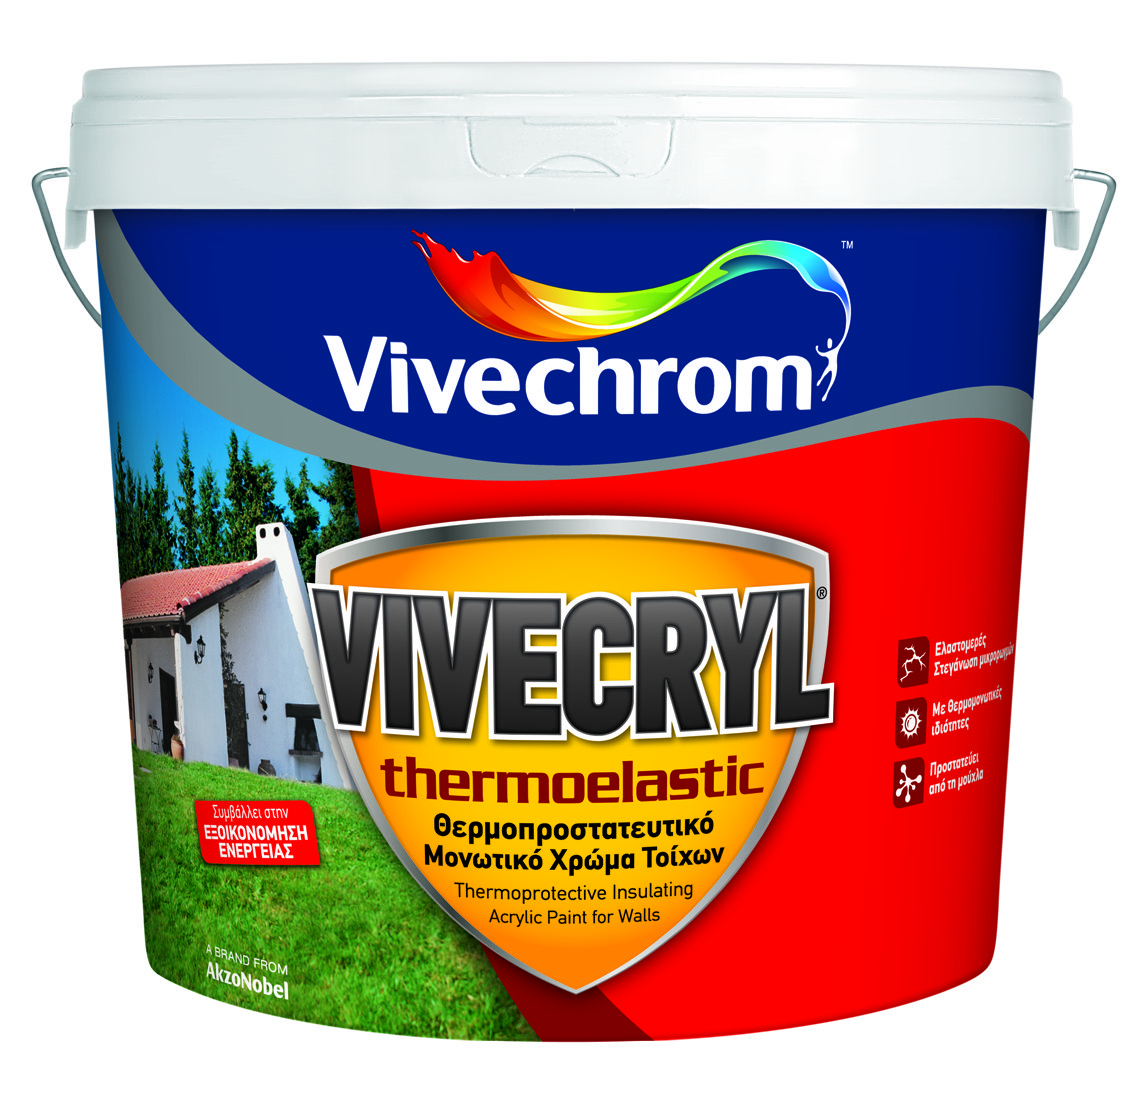 Vivechrom Vivecry Θερμοπροστατευτικό Οικολογικό Ακρυλικό Χρώμα Matt Finish Λευκό 10L